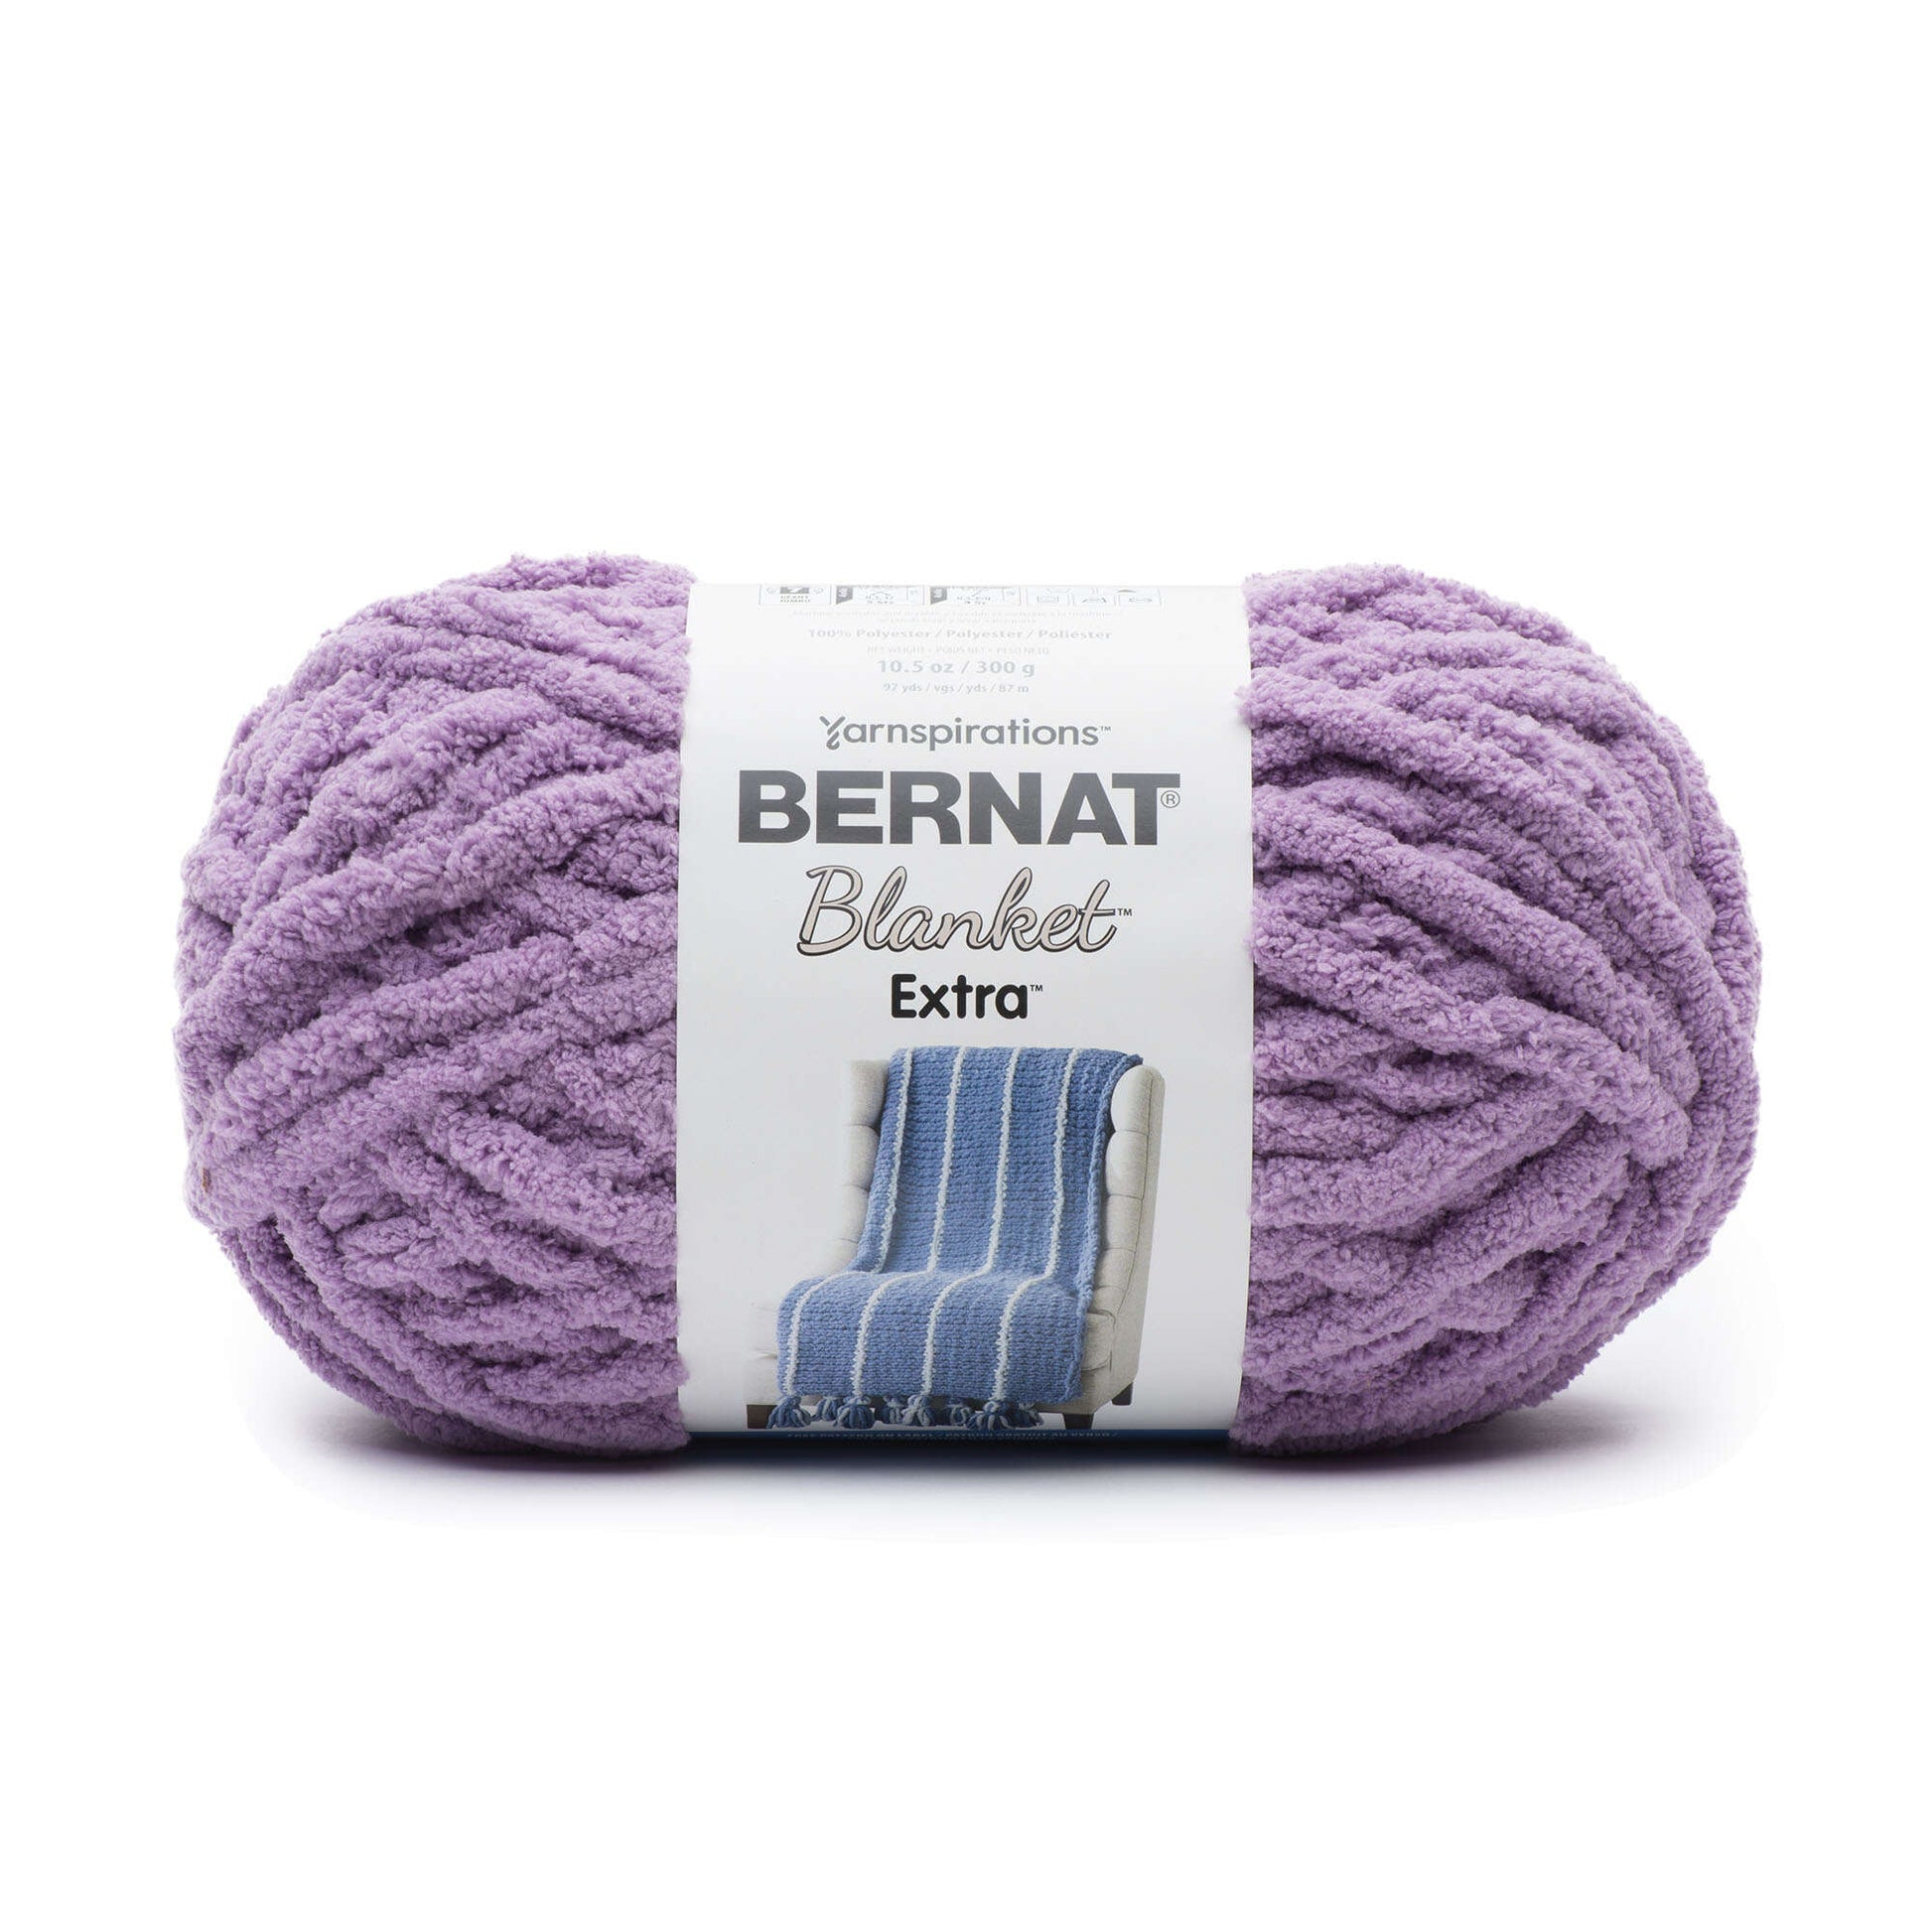 Bernat Blanket Yarn (300g/10.5 oz), Faded Blues